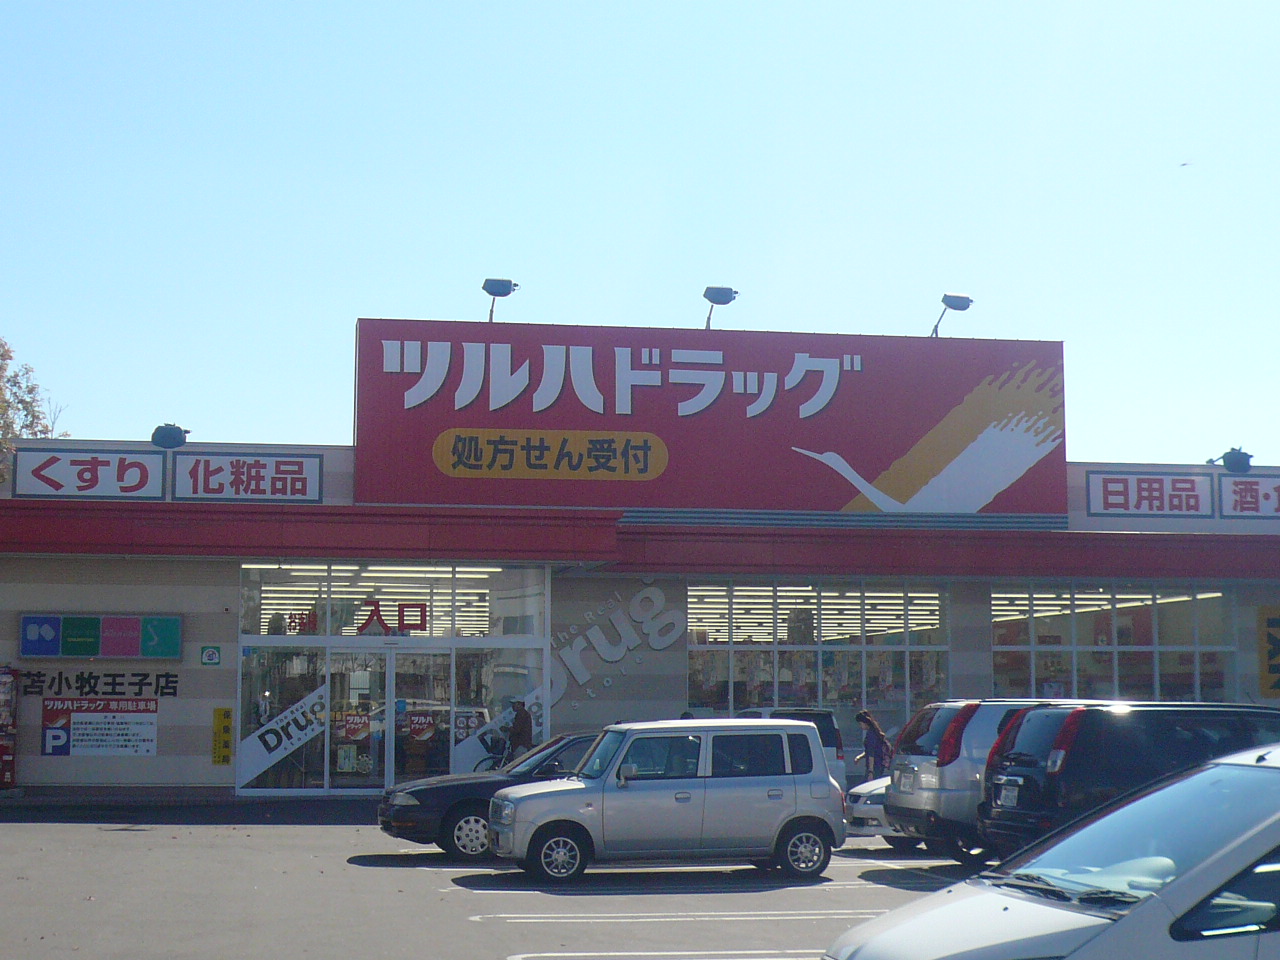 Dorakkusutoa. Tsuruha drag Tomakomai Prince shop 942m until (drugstore)